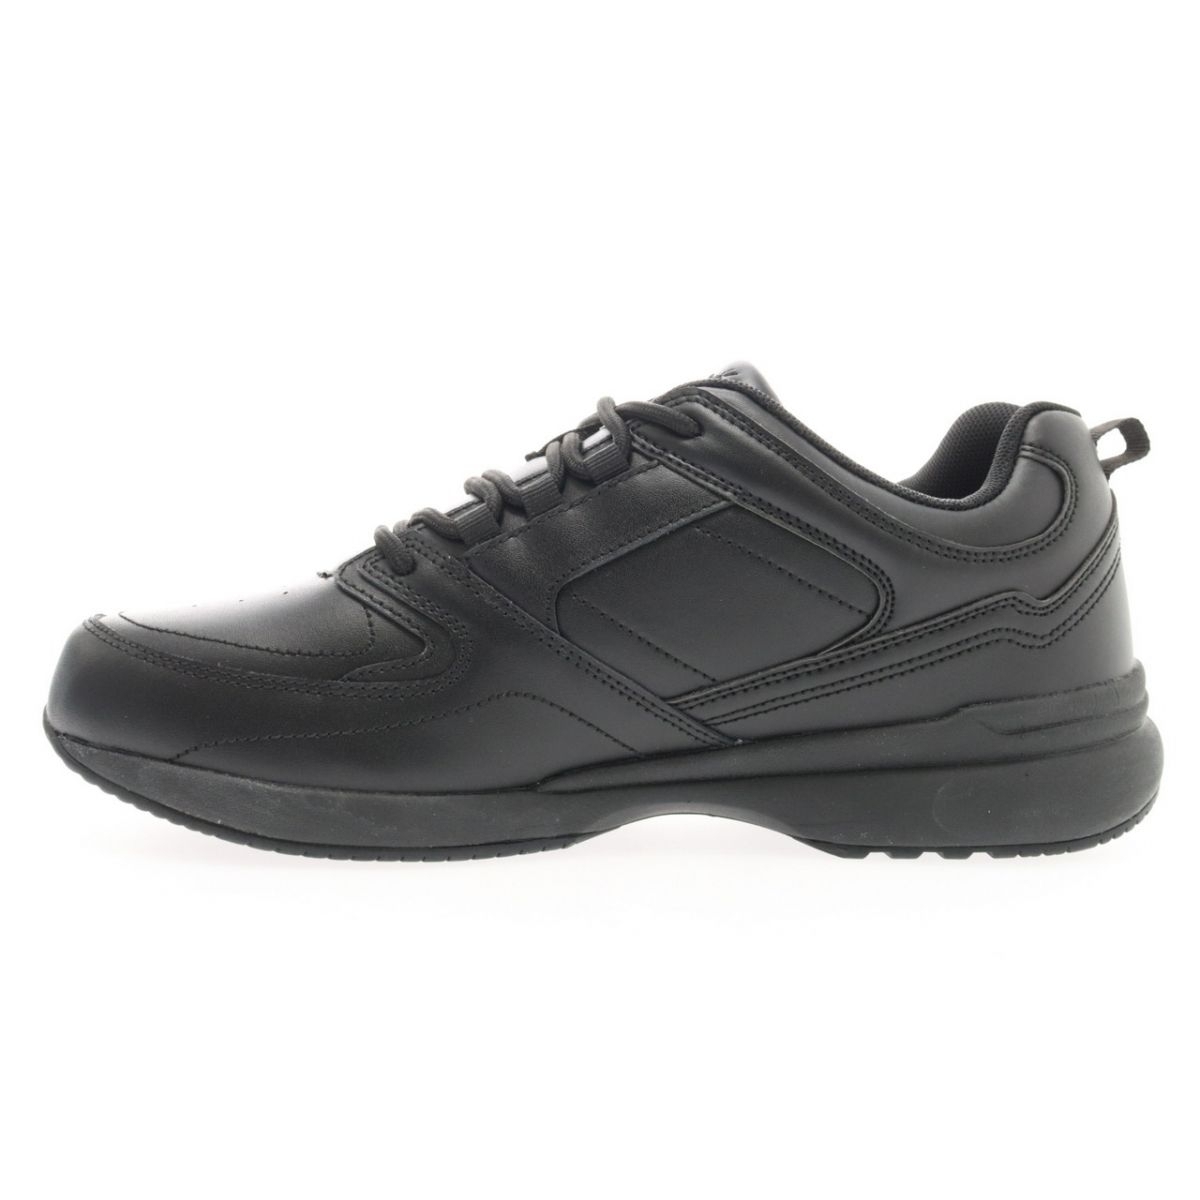 Propet Men's Life Walker Sport Sneaker Black - MAA272LBLK BLACK - BLACK, 7.5